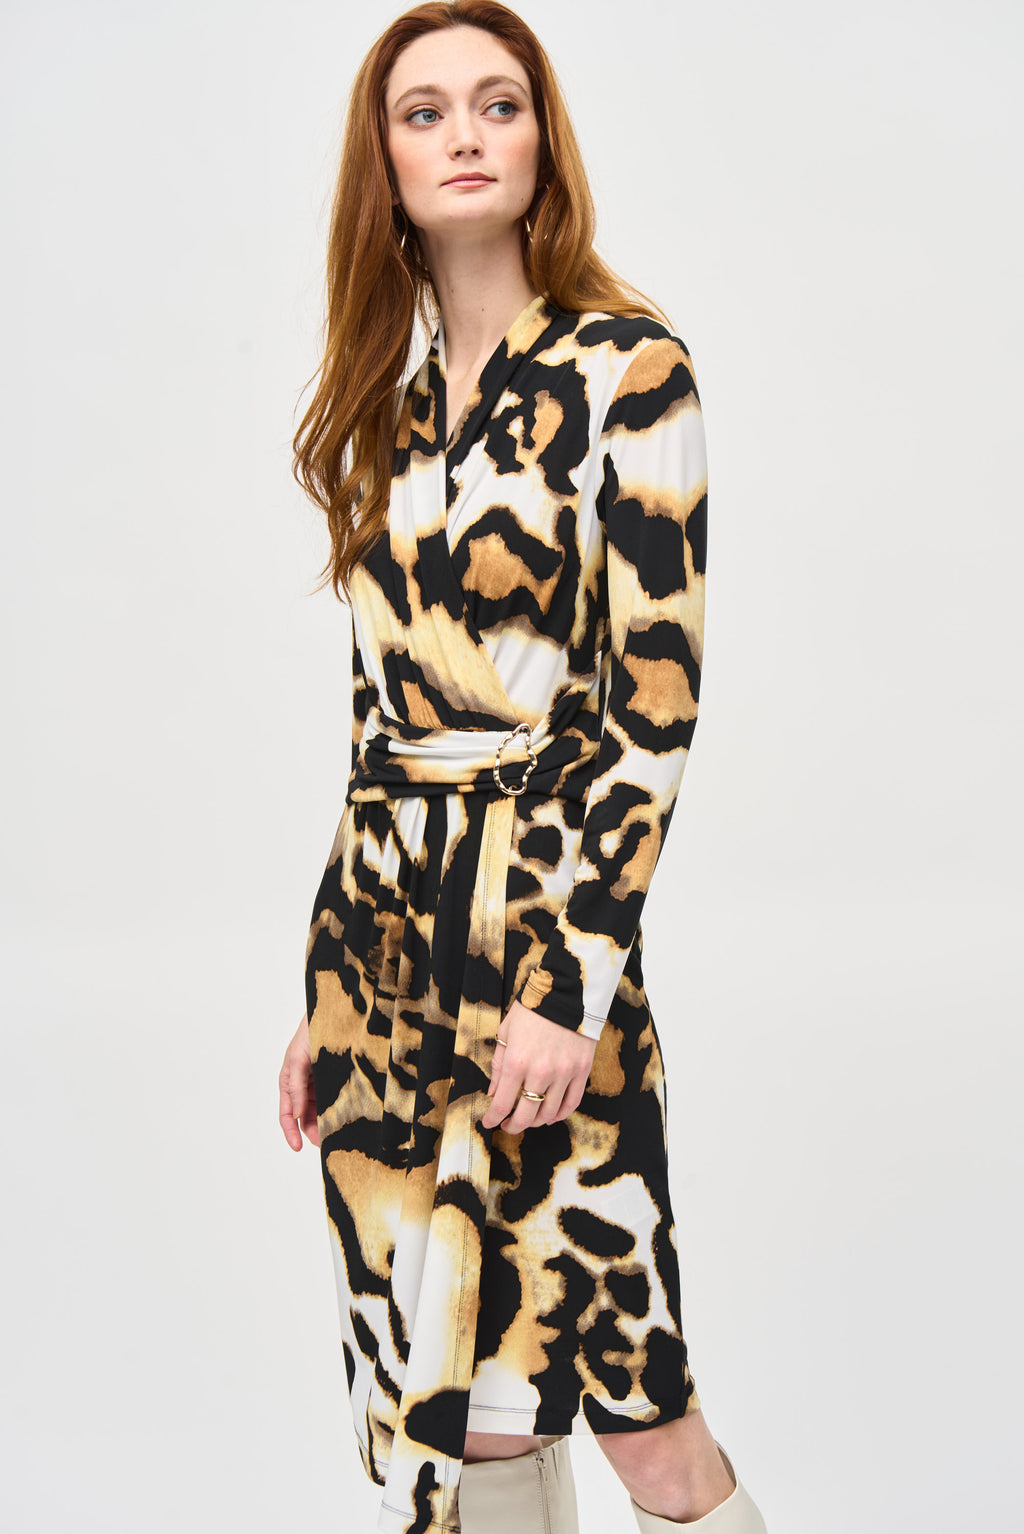 Joseph Ribkoff Off-White/Multi Animal Print Wrap Dress Style 243143